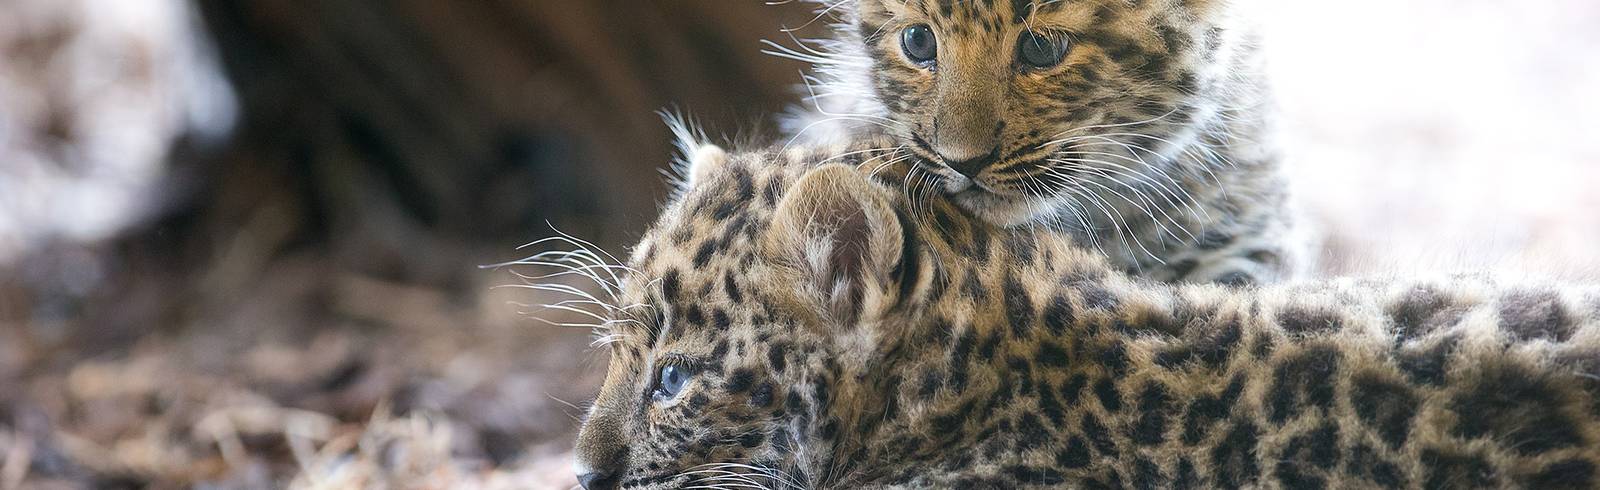 Leopardenbabys heißen "Baikal" und "Inga"